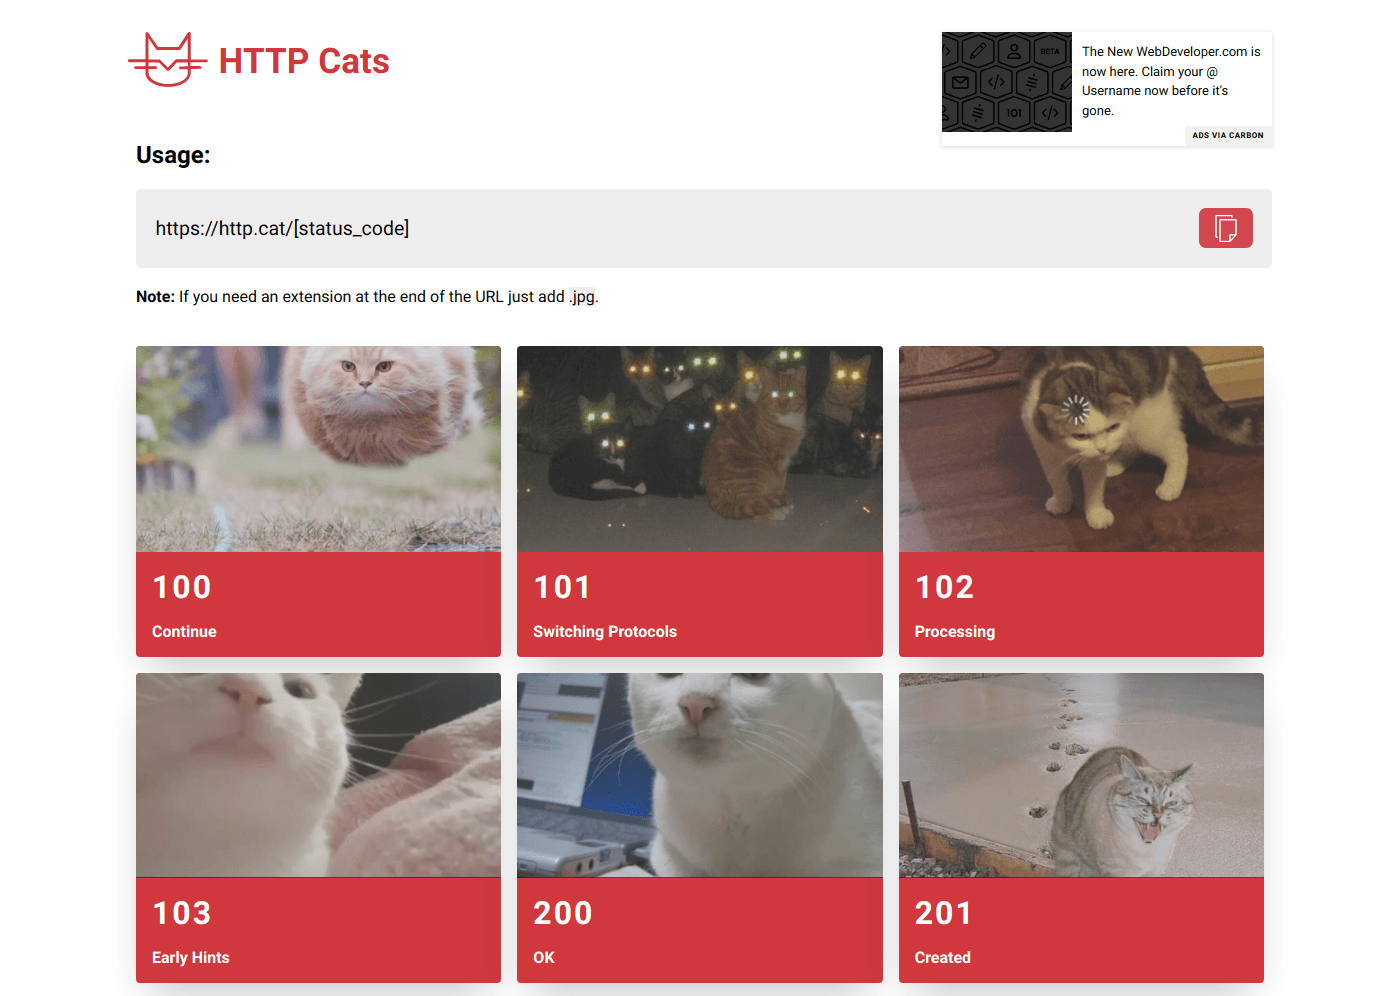 Http.cat website